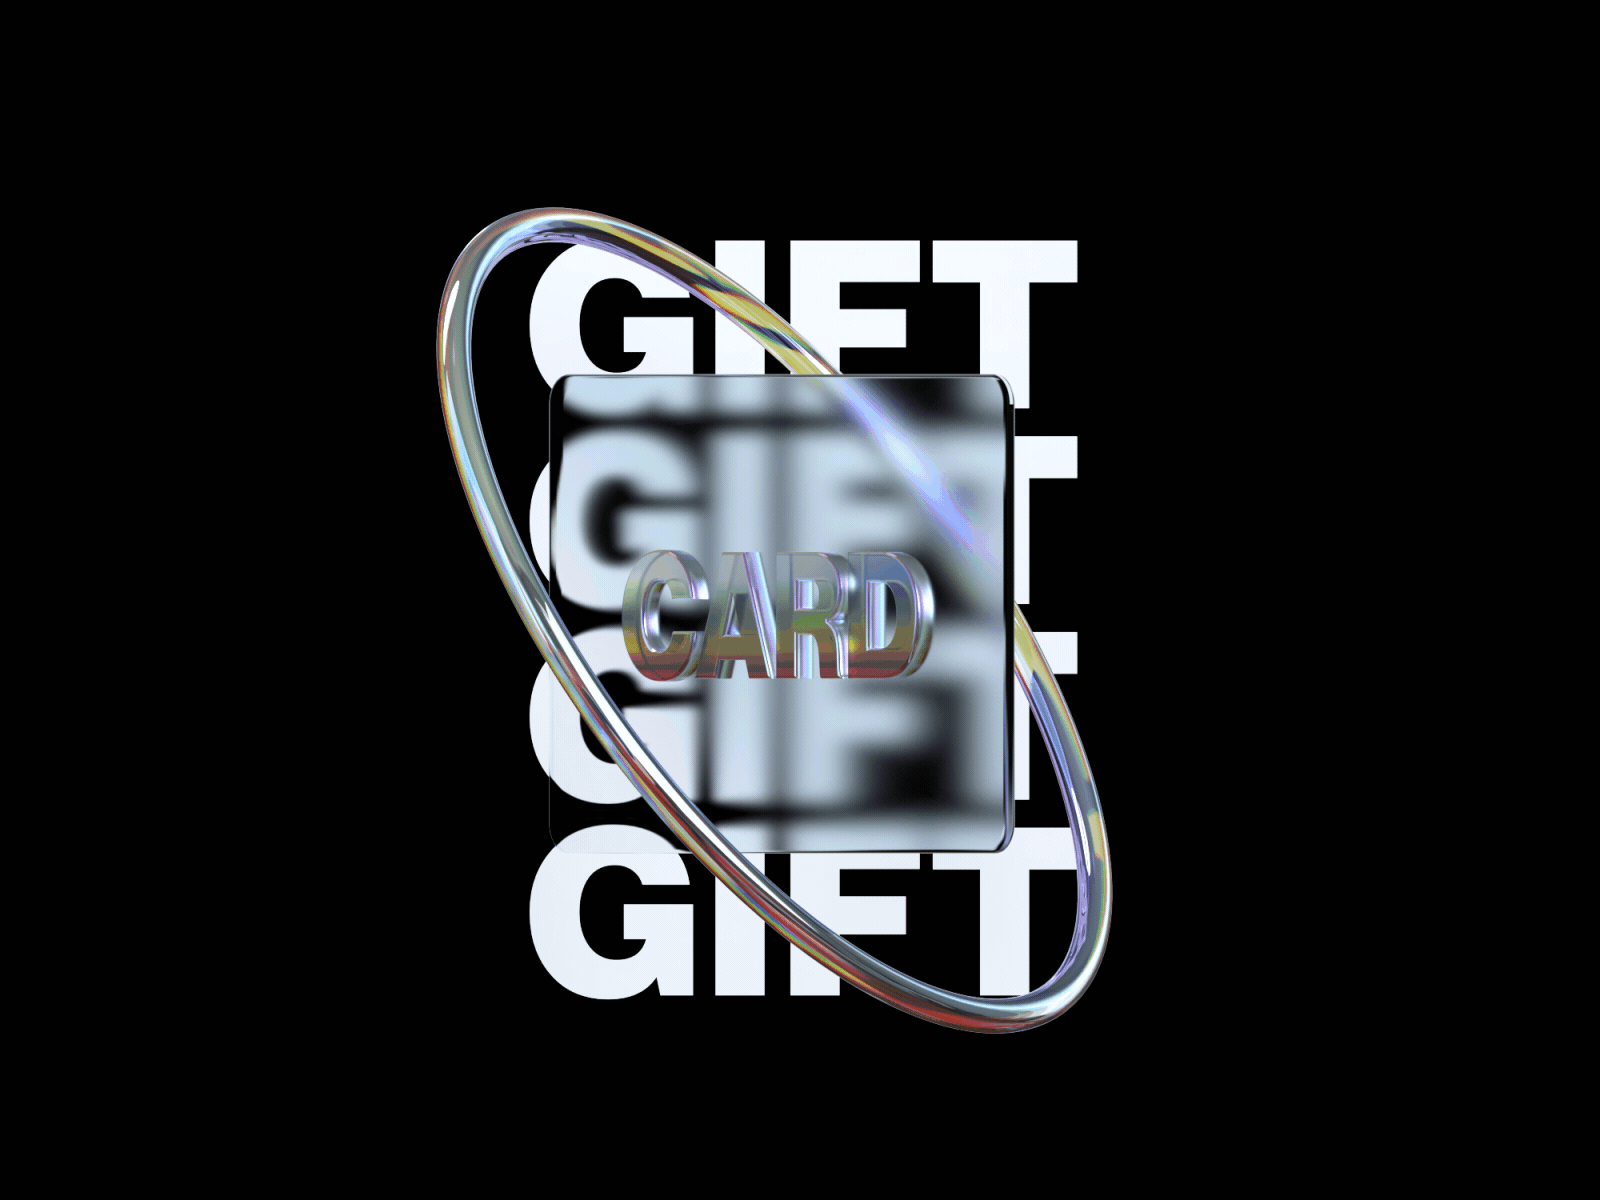 Gift Card animation UCRAFT